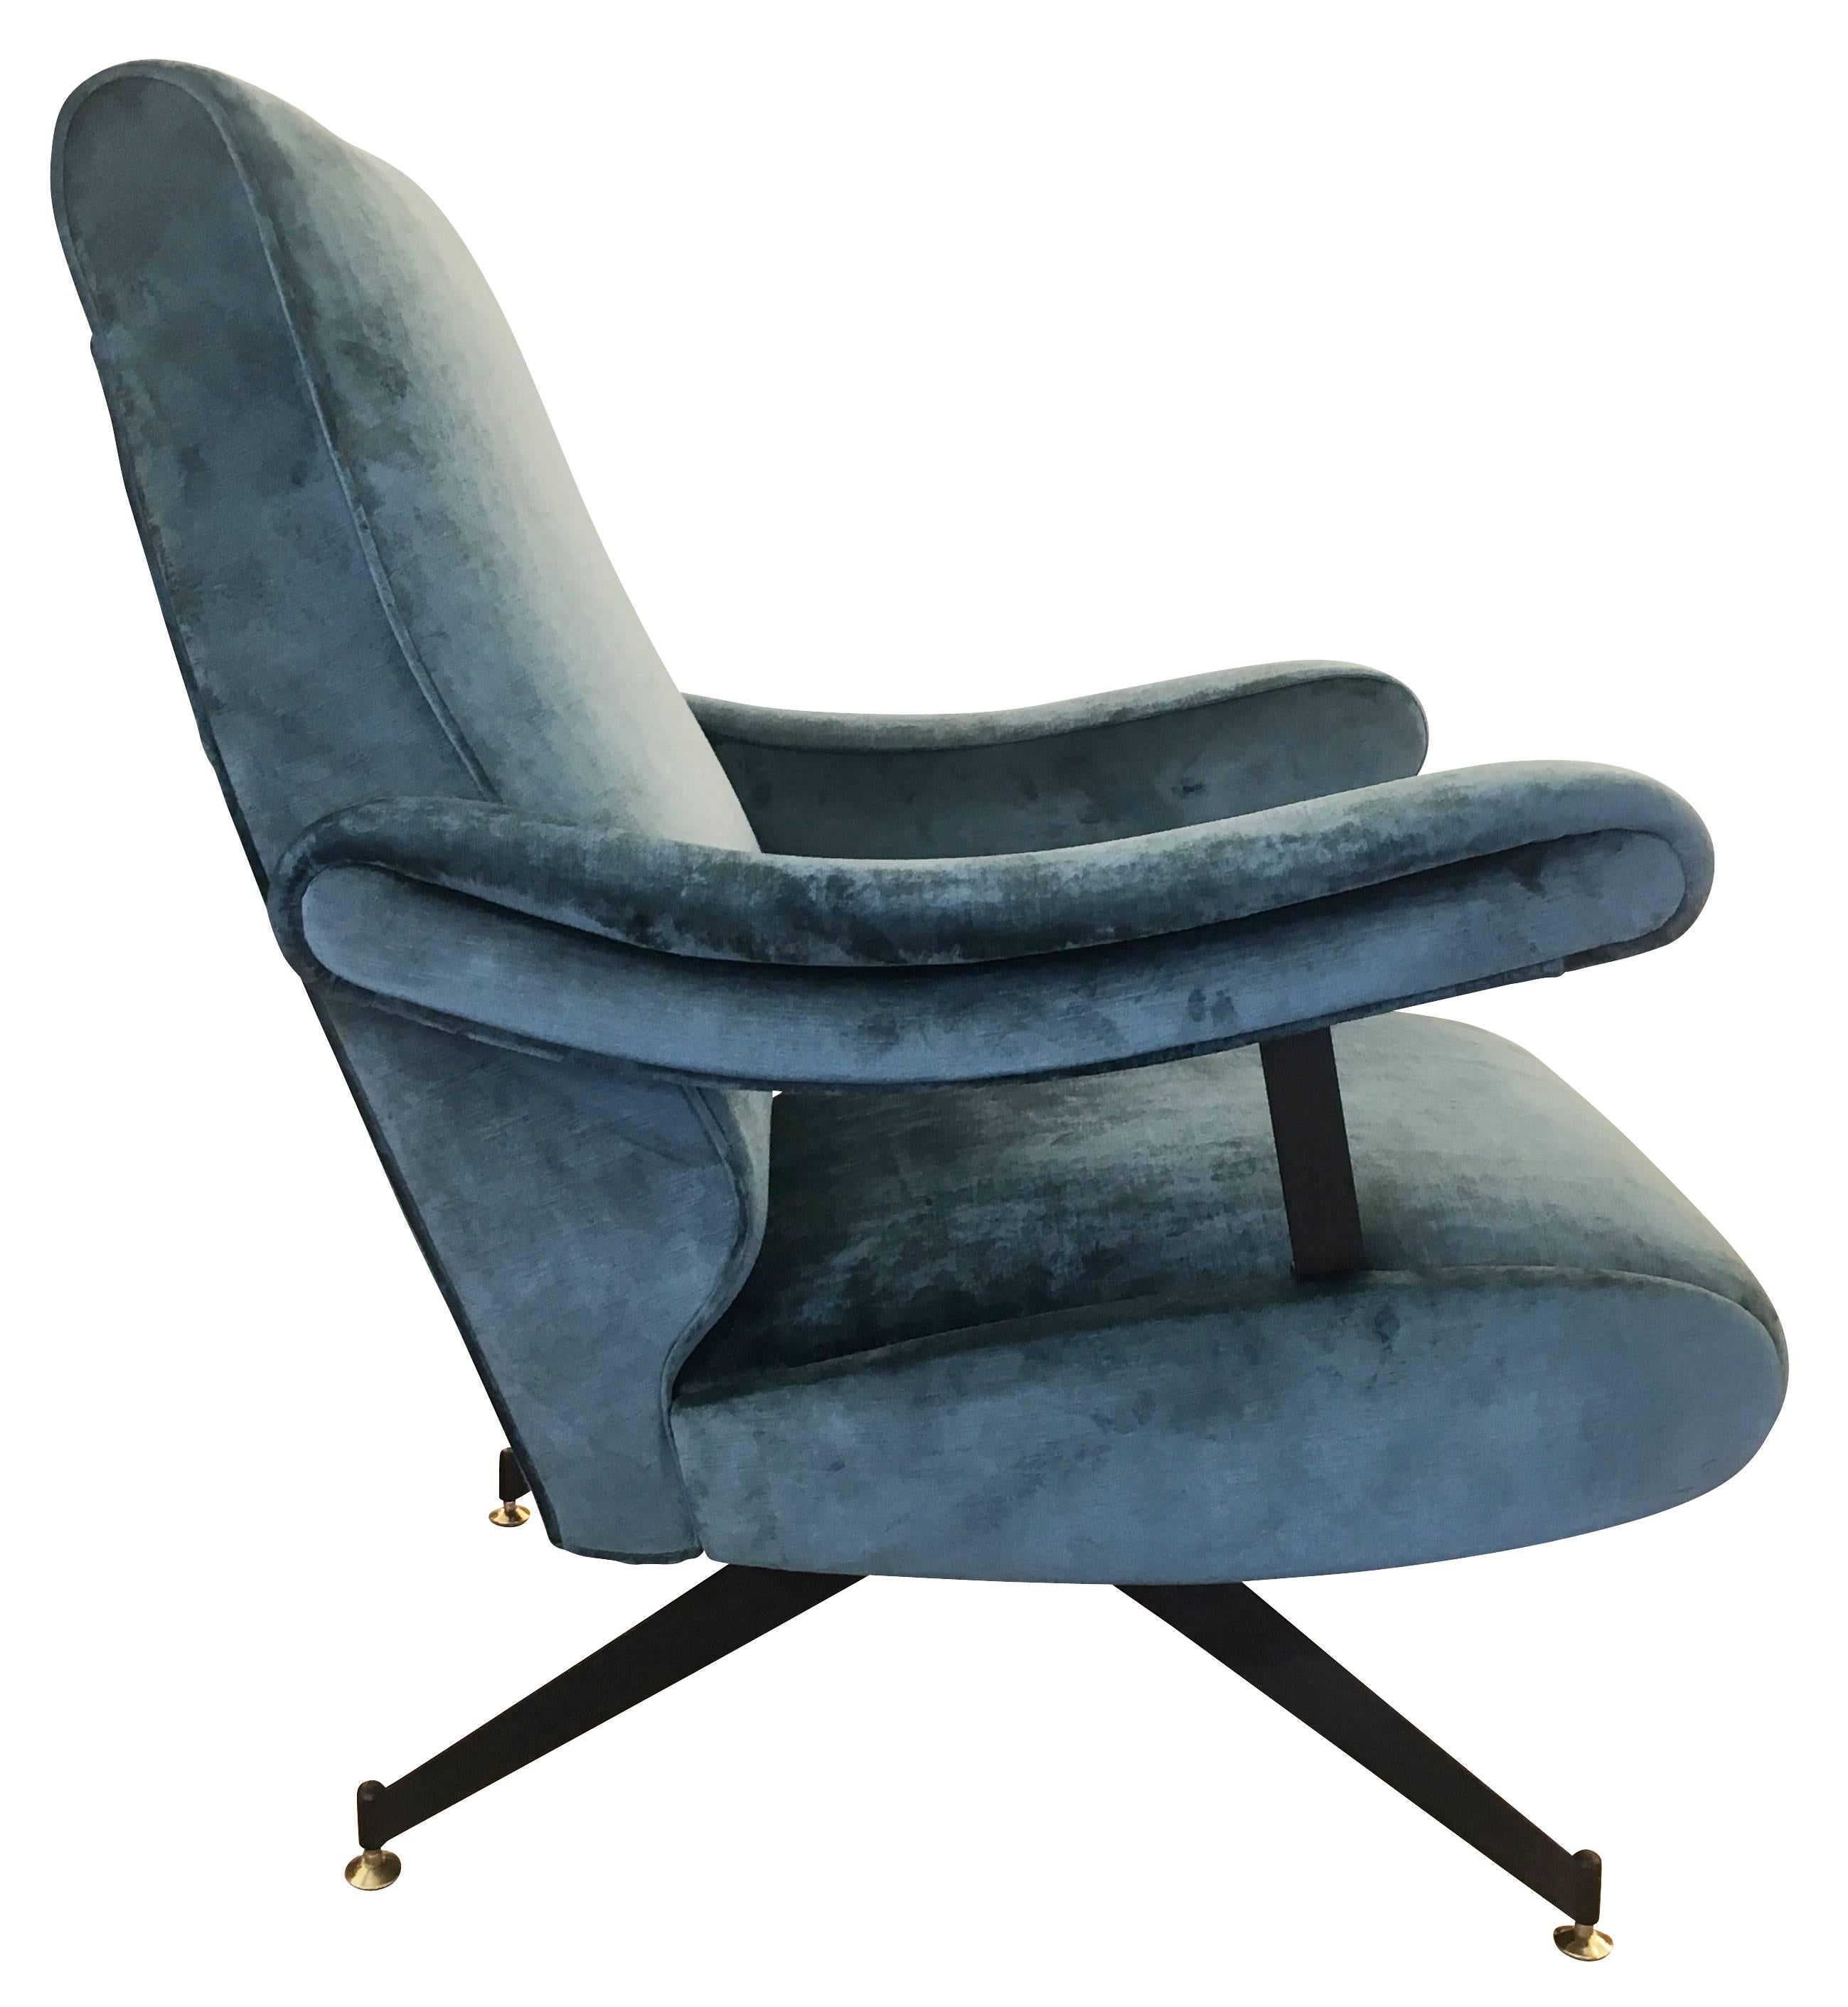 Italian Reclining Lounge Chair by Formanova